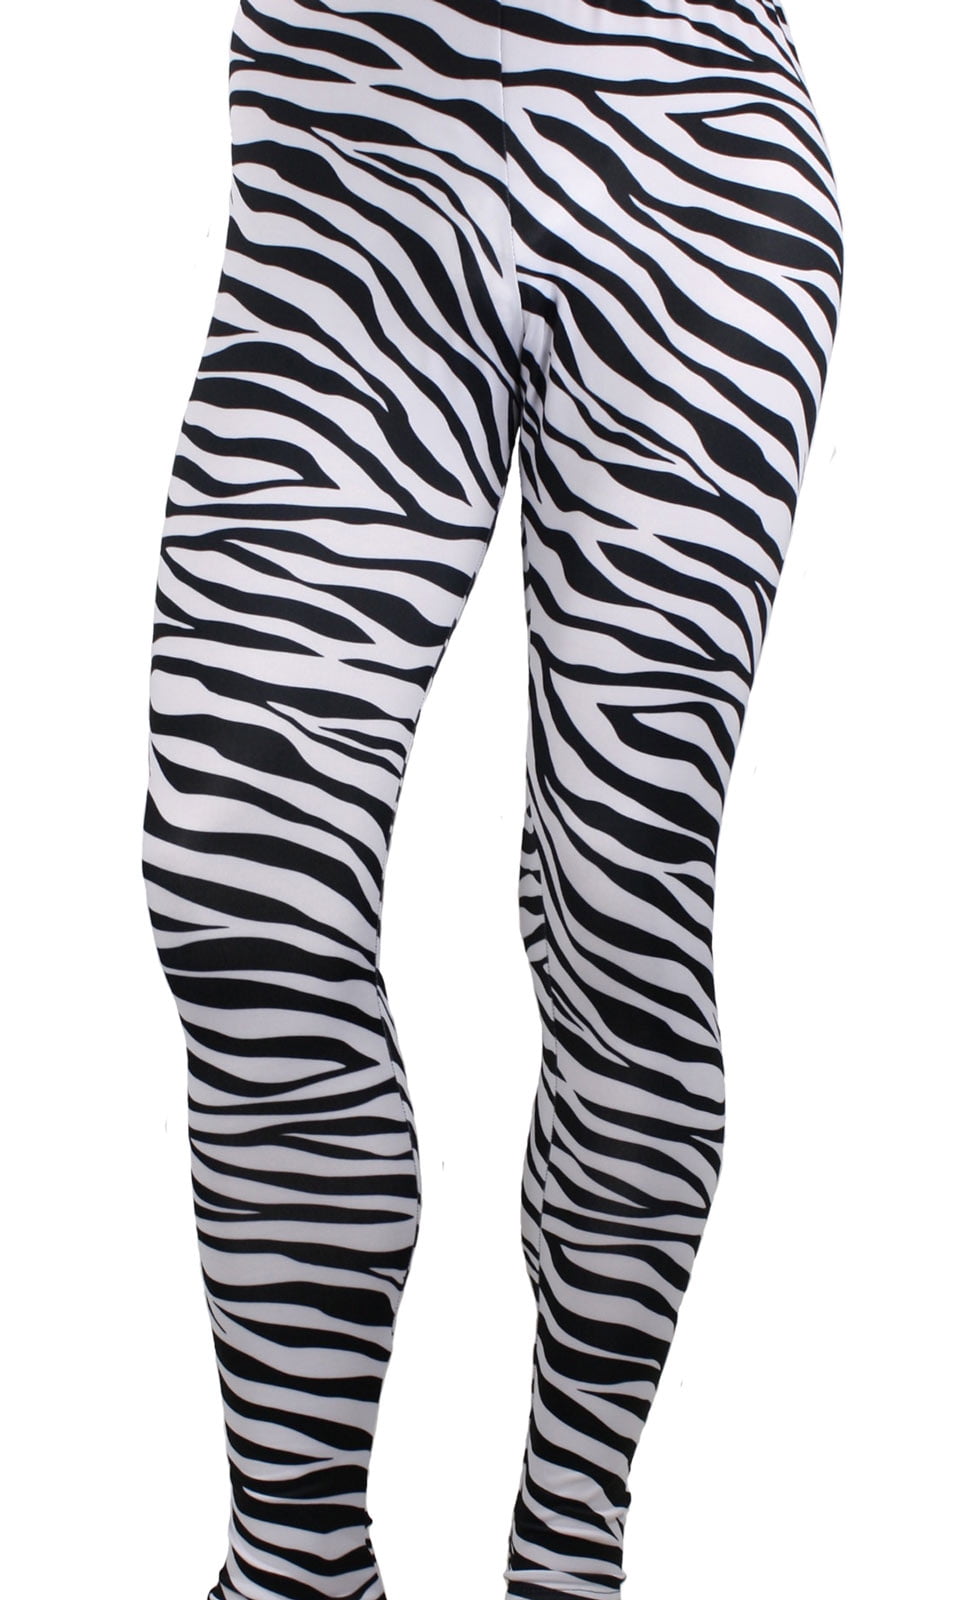 Zebra Print Men's Spandex Stretch Pants Small 